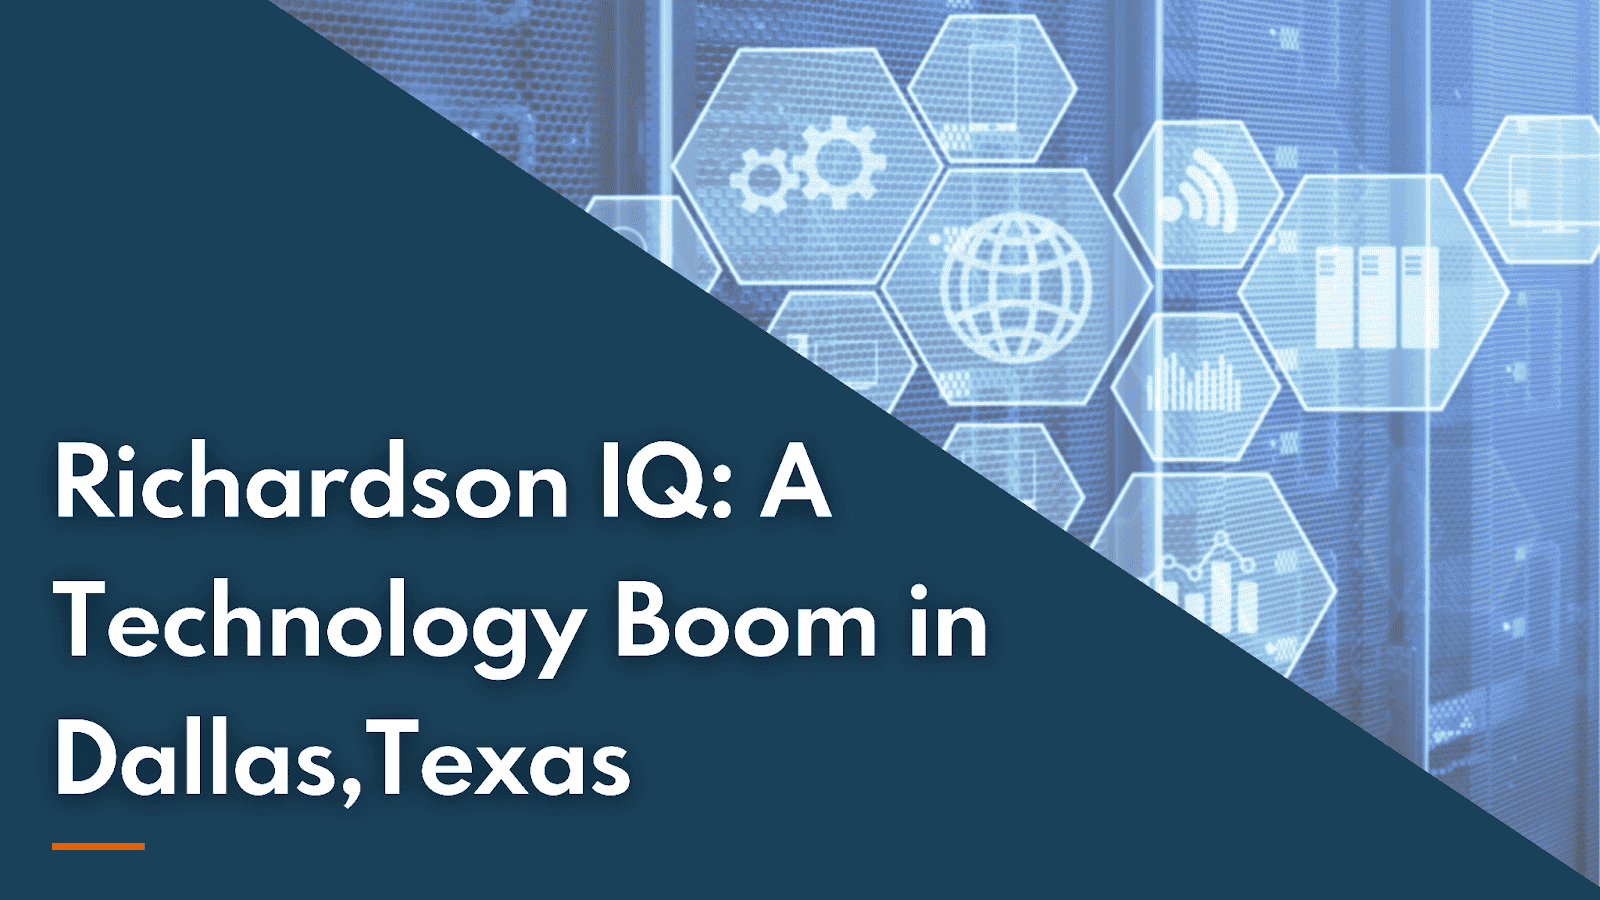 Richardson Innovation Quarter: A Technology Boom in Dallas, Texas